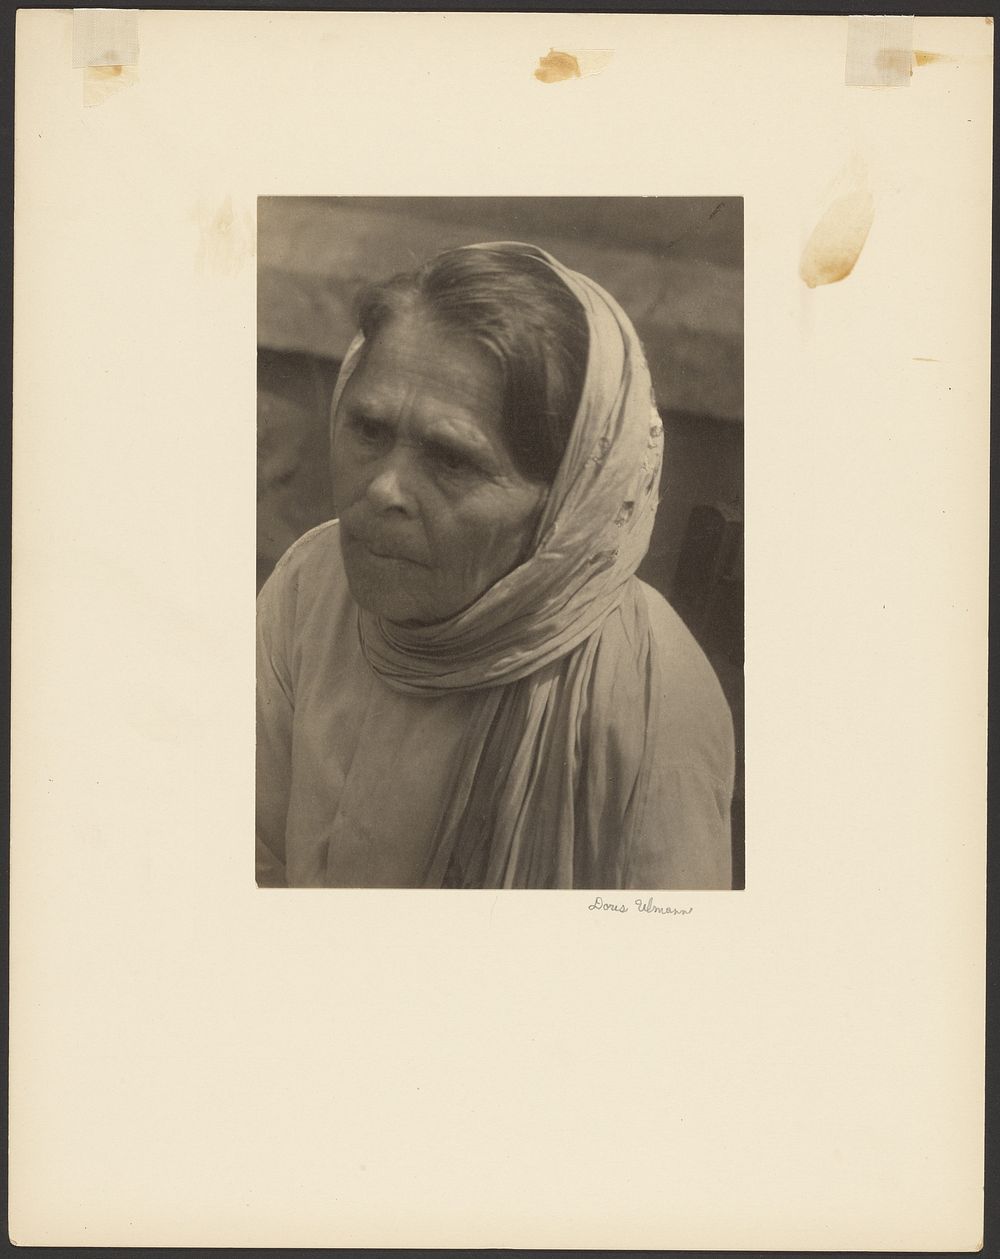 Woman with Shawl Around Head by Doris Ulmann